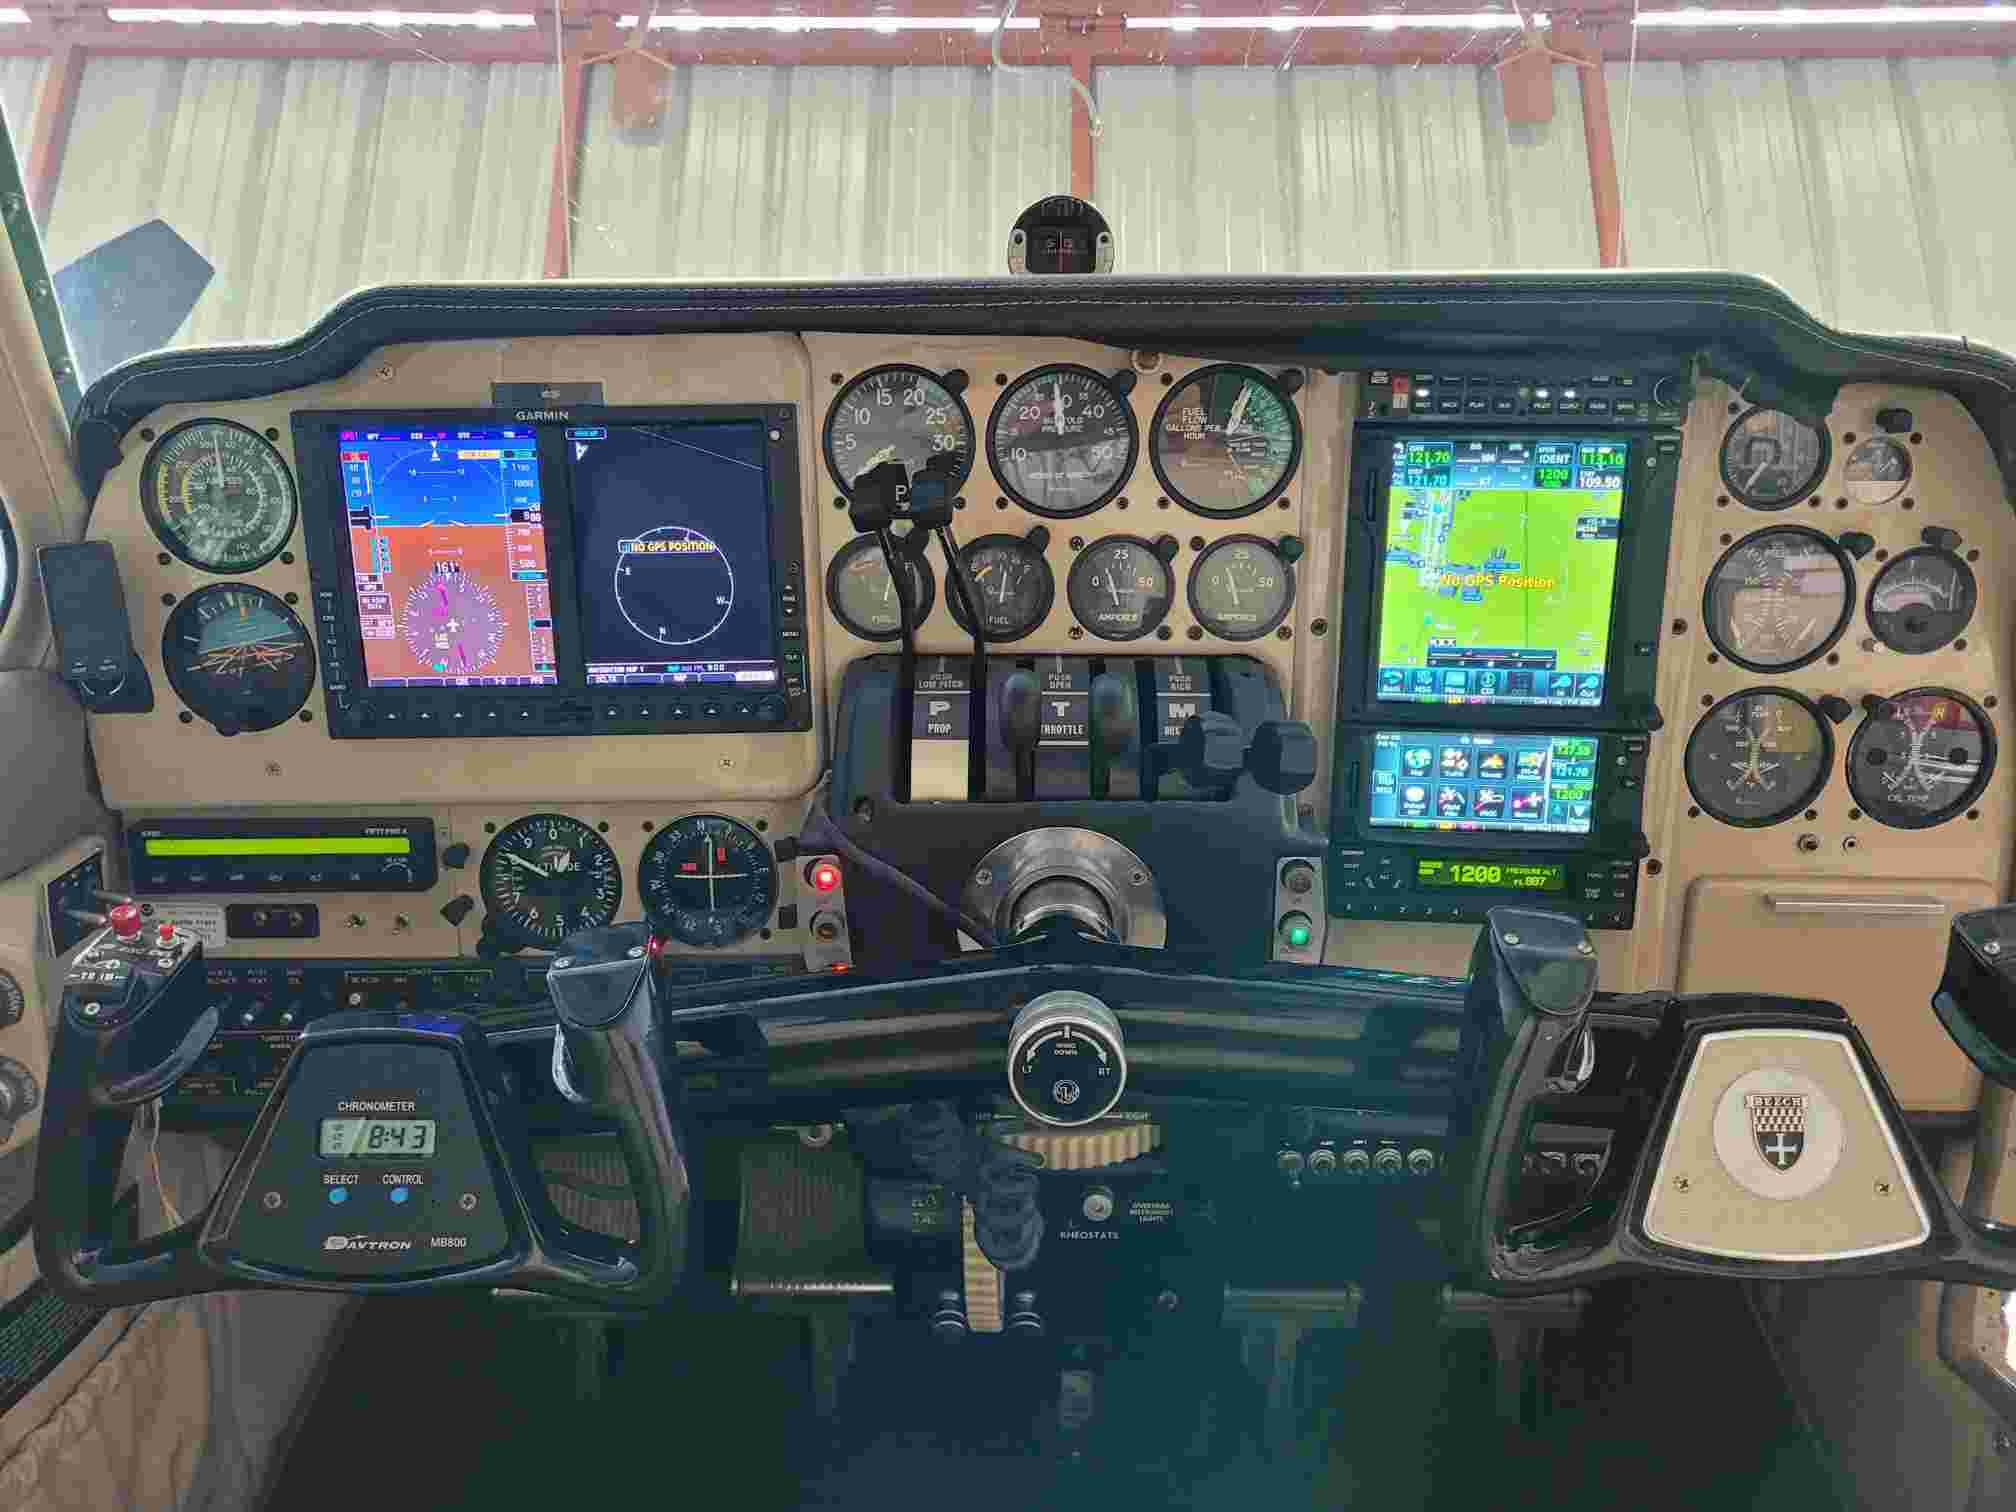 Beechcraft Travel Air interior preview